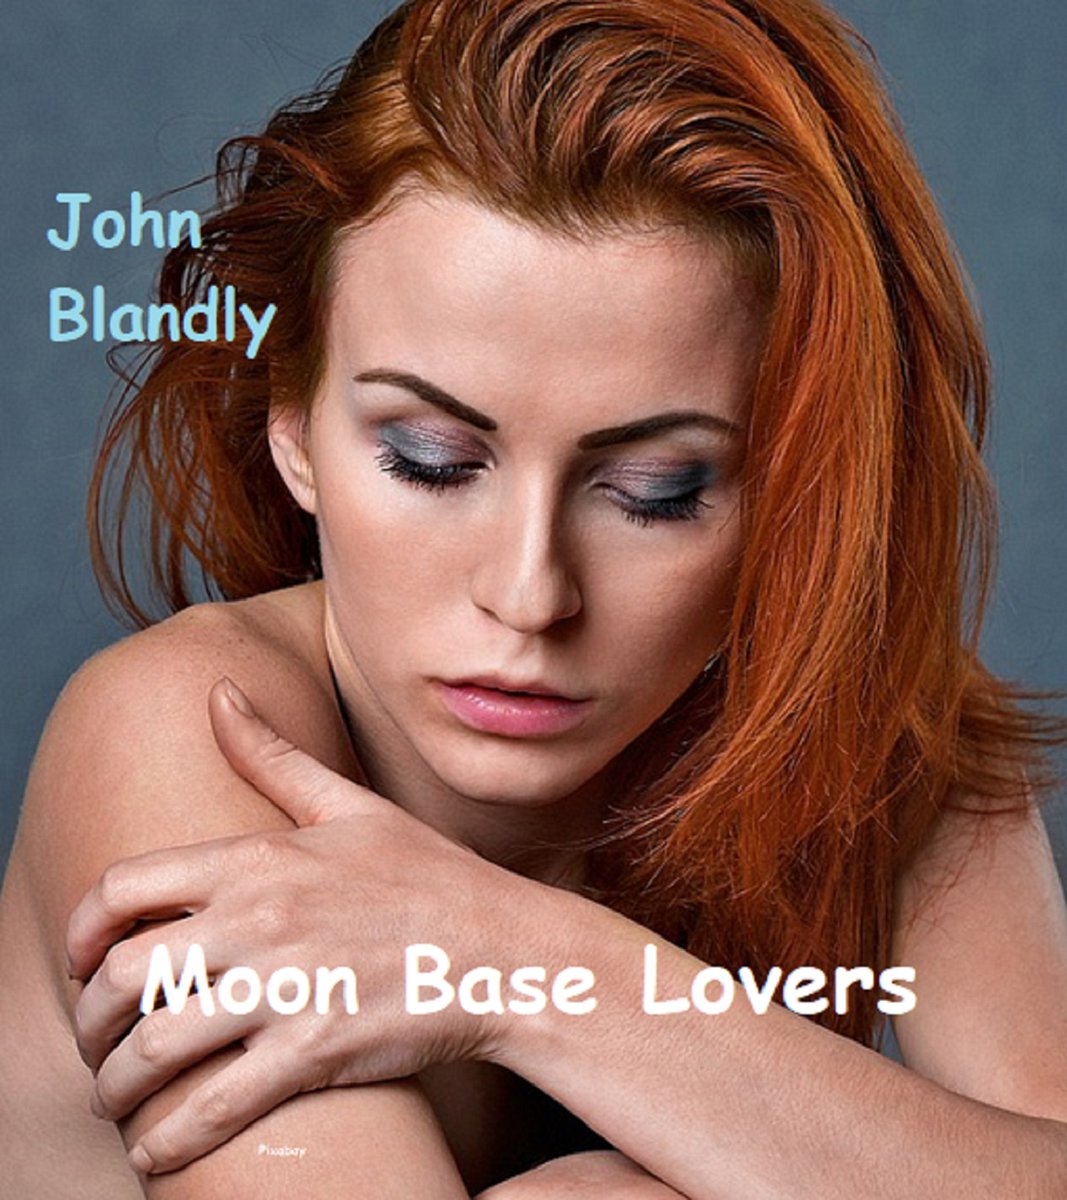 @nookBN @BNBuzz @AppleBooks @Vivlio_fr #blandly #nook #freebook @freeboostpromo 

sci-fi

barnesandnoble.com/w/moon-base-lo…

romance #romancenovels 

he met her on a moon base #RomanceNovel 

workplace affair #scifibooks #CanadaLife #australia #newzealand